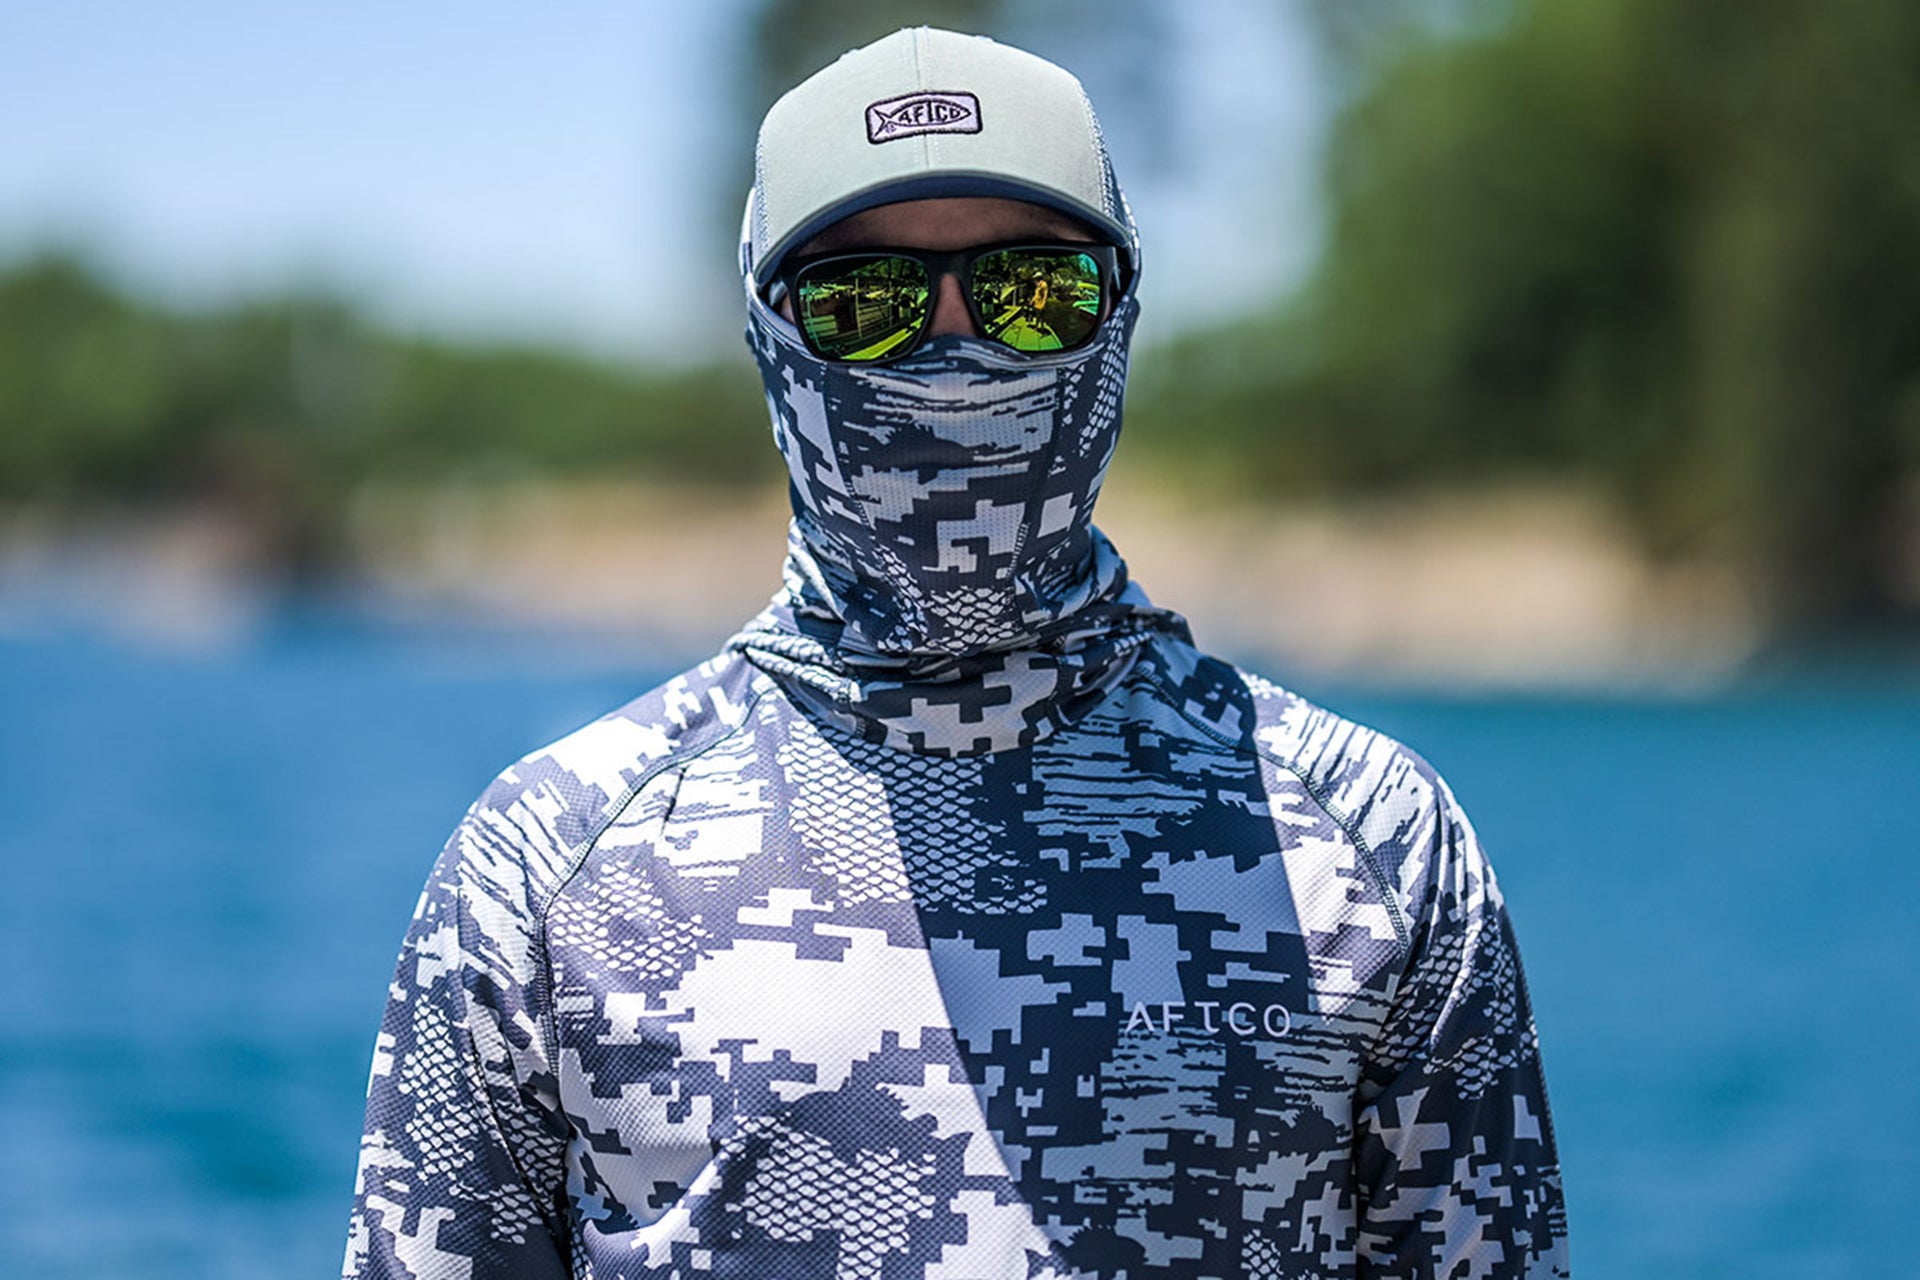 Pelagic Fishing Shirts Summer Long Sleeve UV Protection Fishing